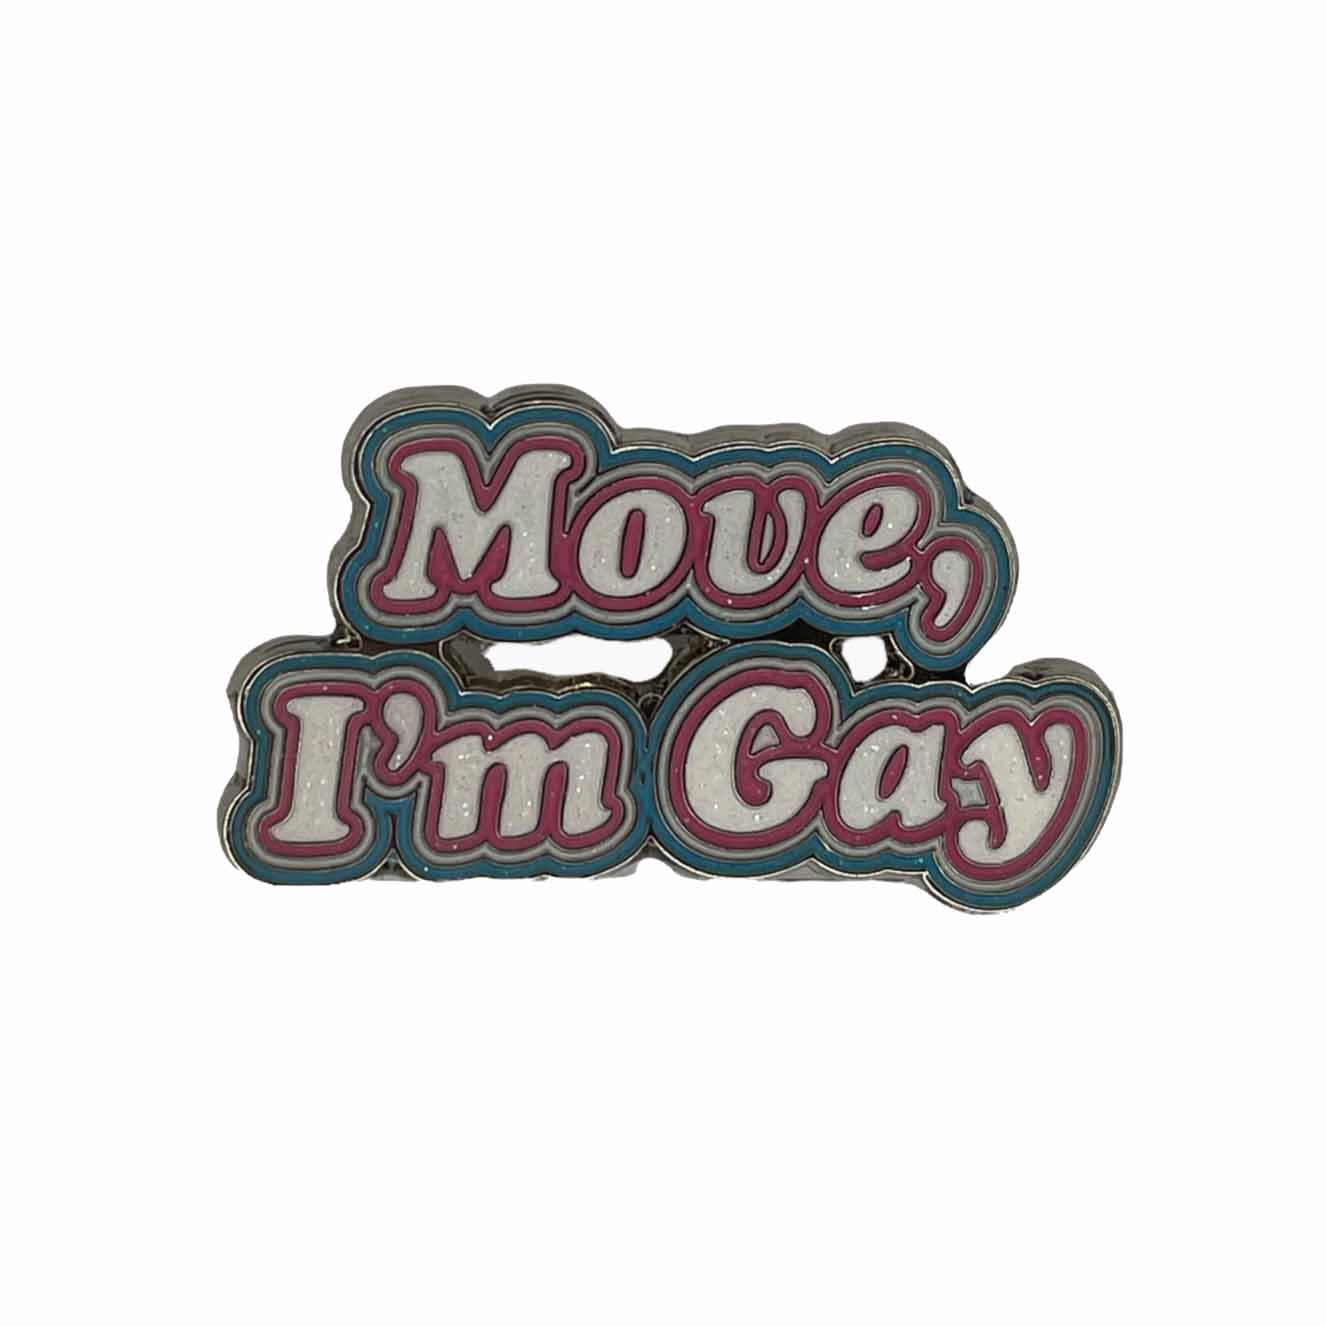 Move I'm gay enamel pin